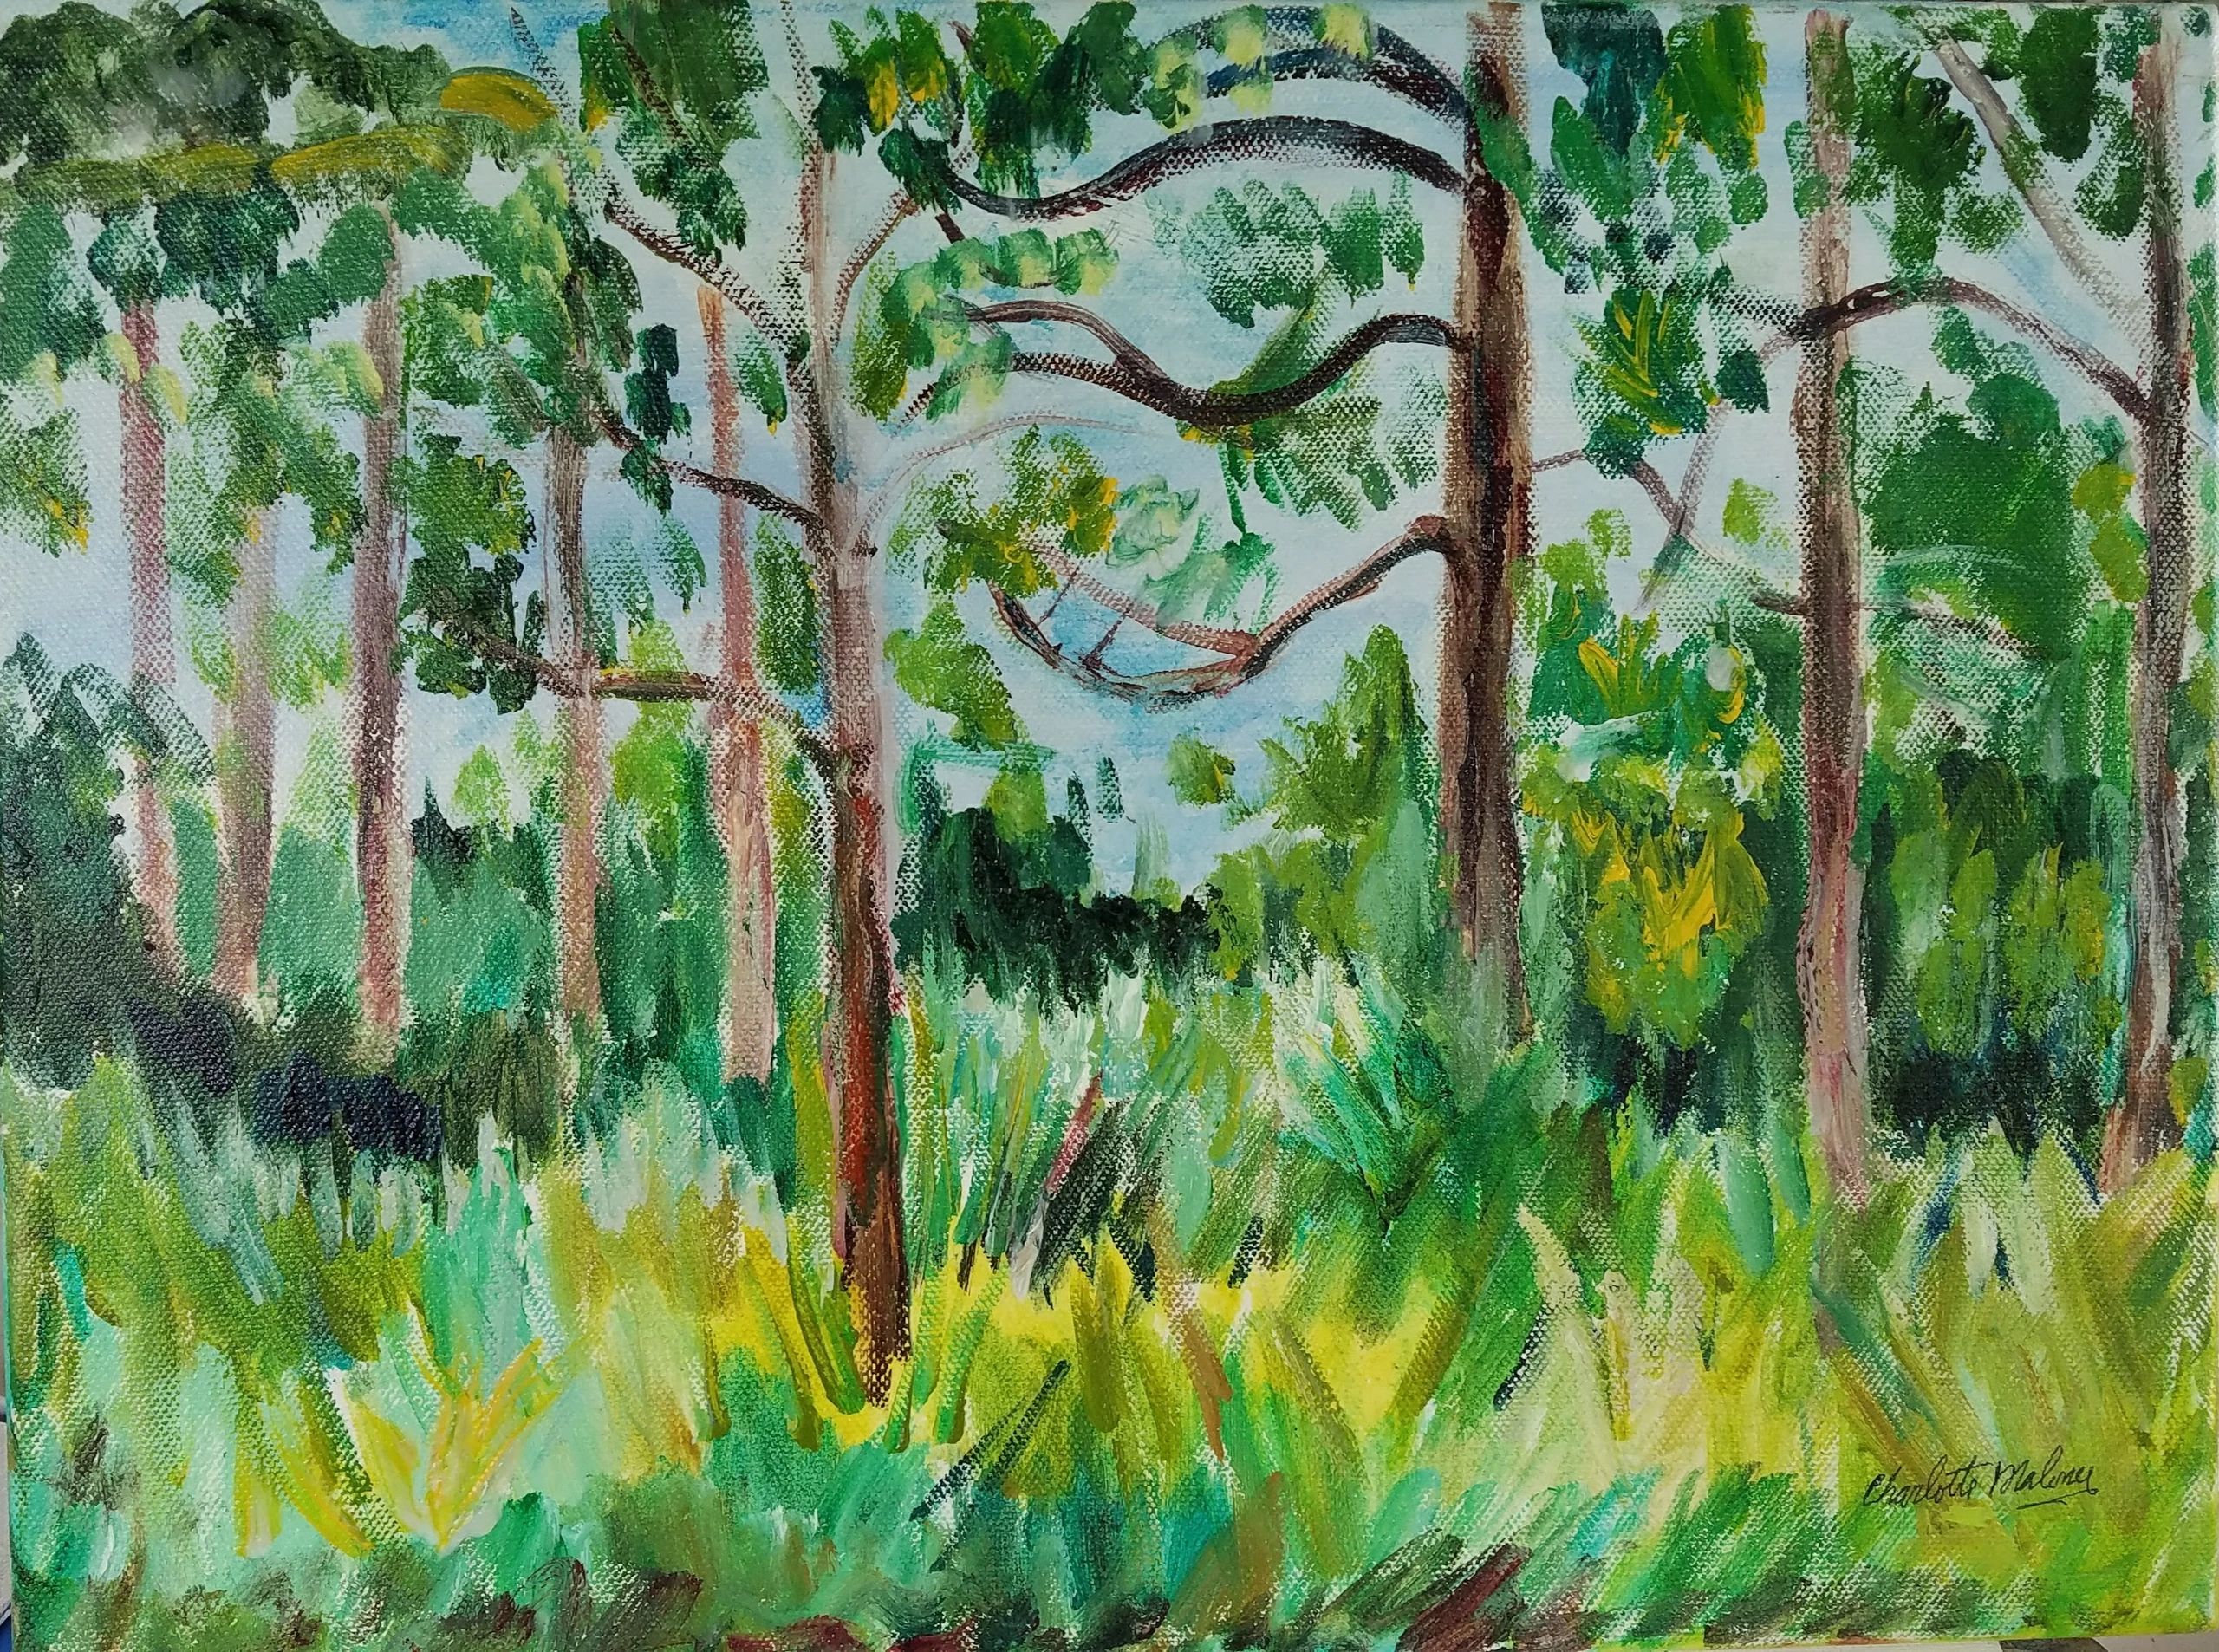 Title, pine trees. 
Medium, oil on canvas,
Size,11” x 14”